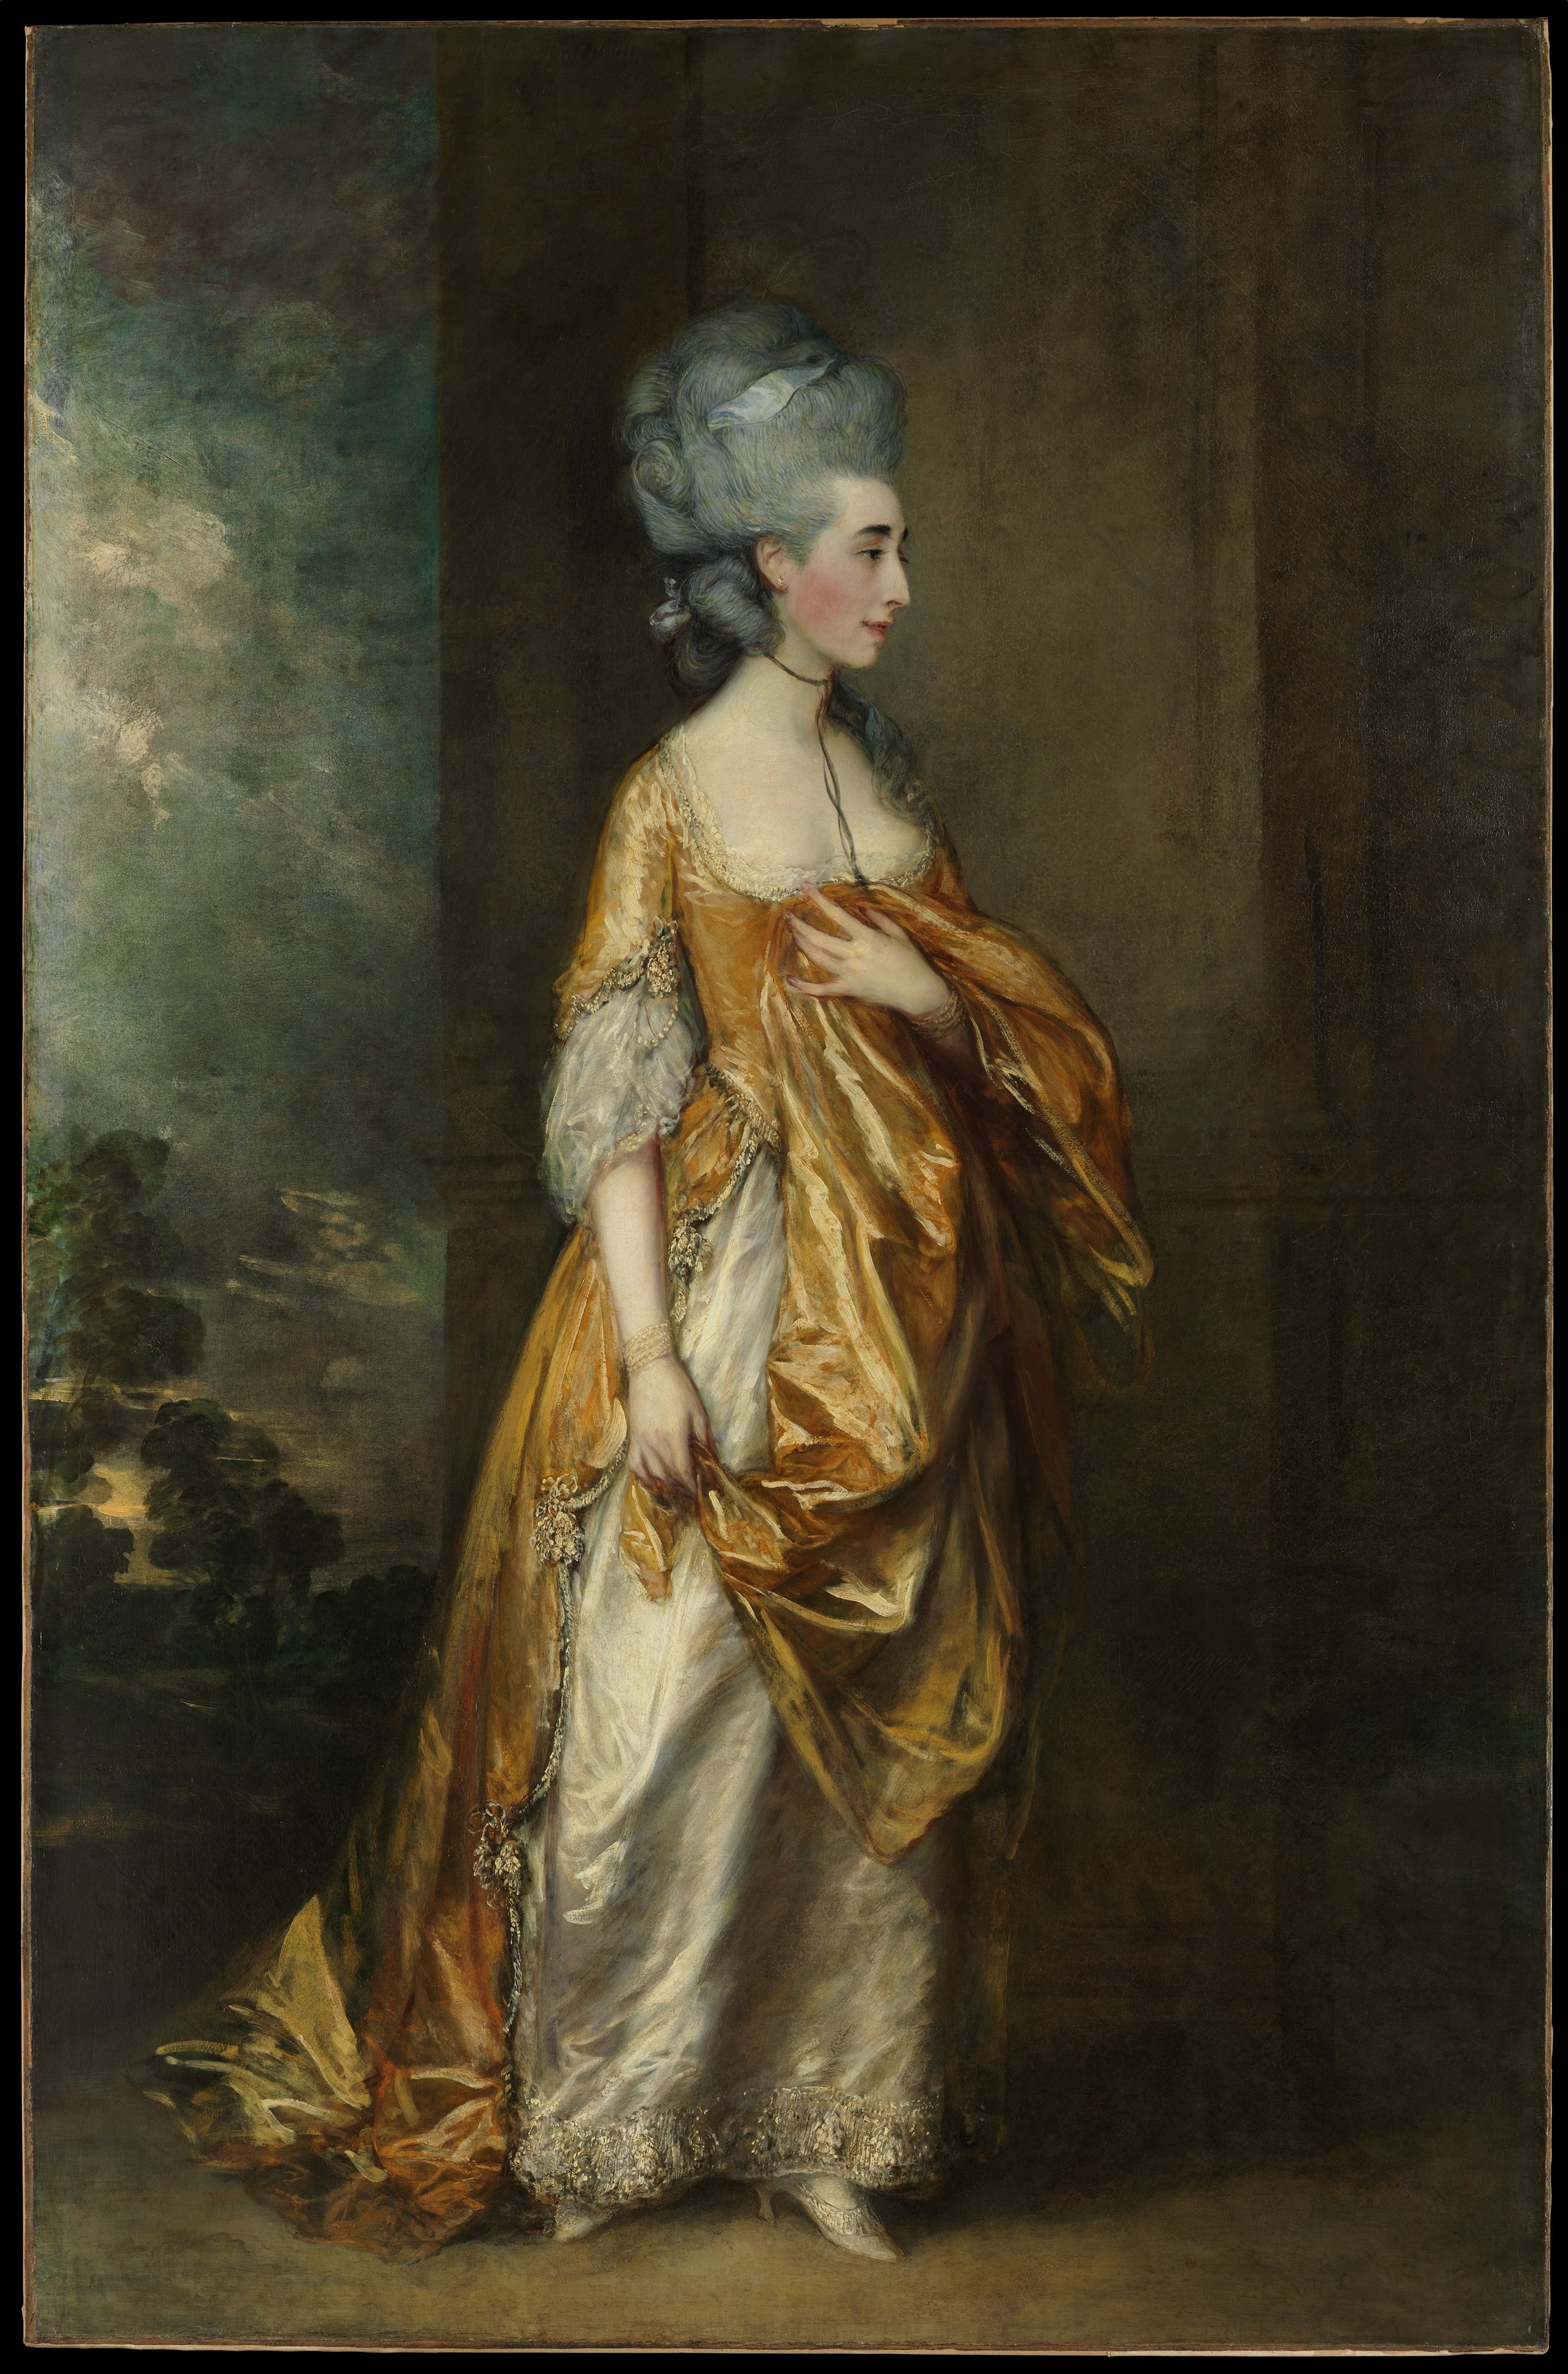 Mrs. Grace Dalrymple Elliott by Thomas Gainsborough - 1778 - 234.3 x 153.7cm Metropolitan Museum of Art